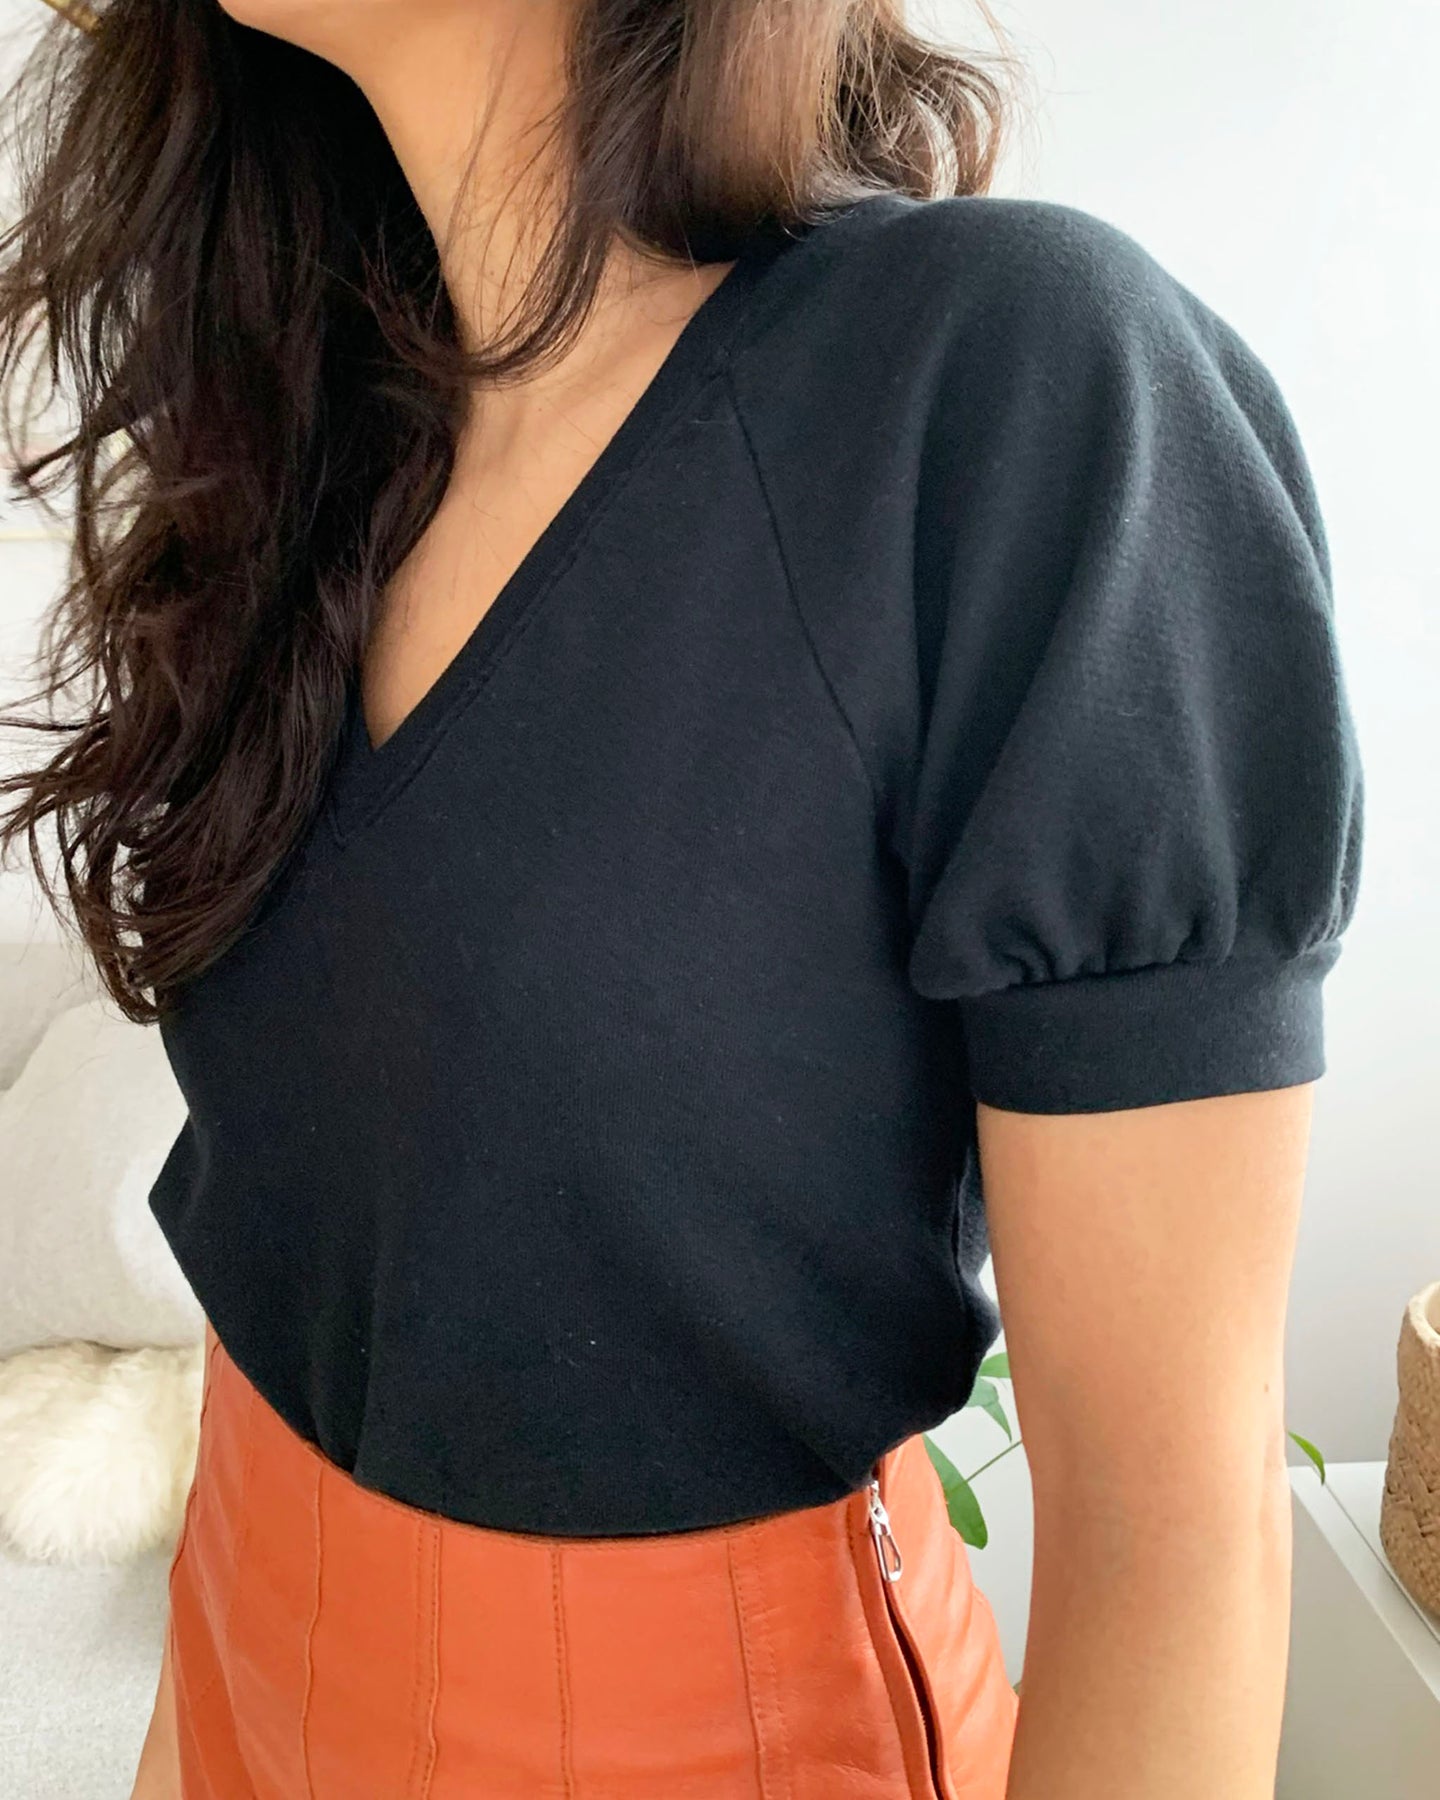 Side profile of sleeve detail of black organic cotton v-neck sweatshirt on model in orange skirt